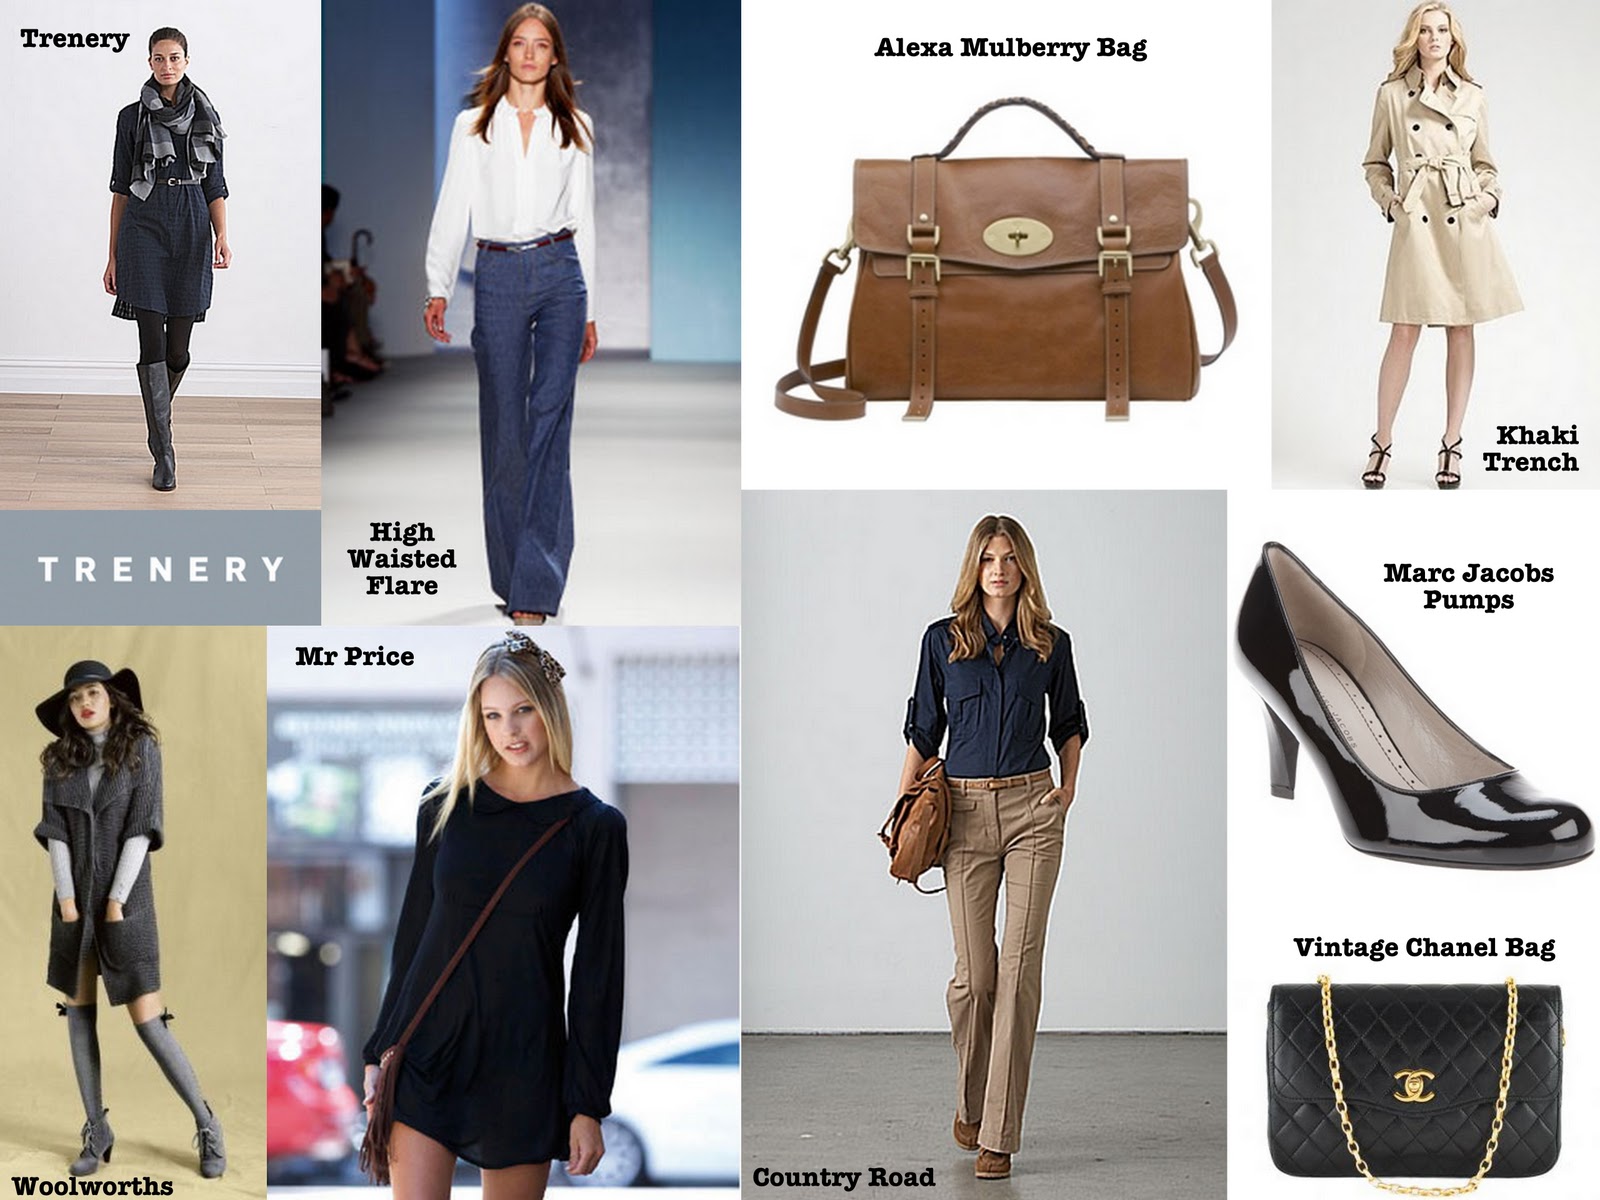 Blake Lively announced as new face of Chanel's Mademoiselle handbag line